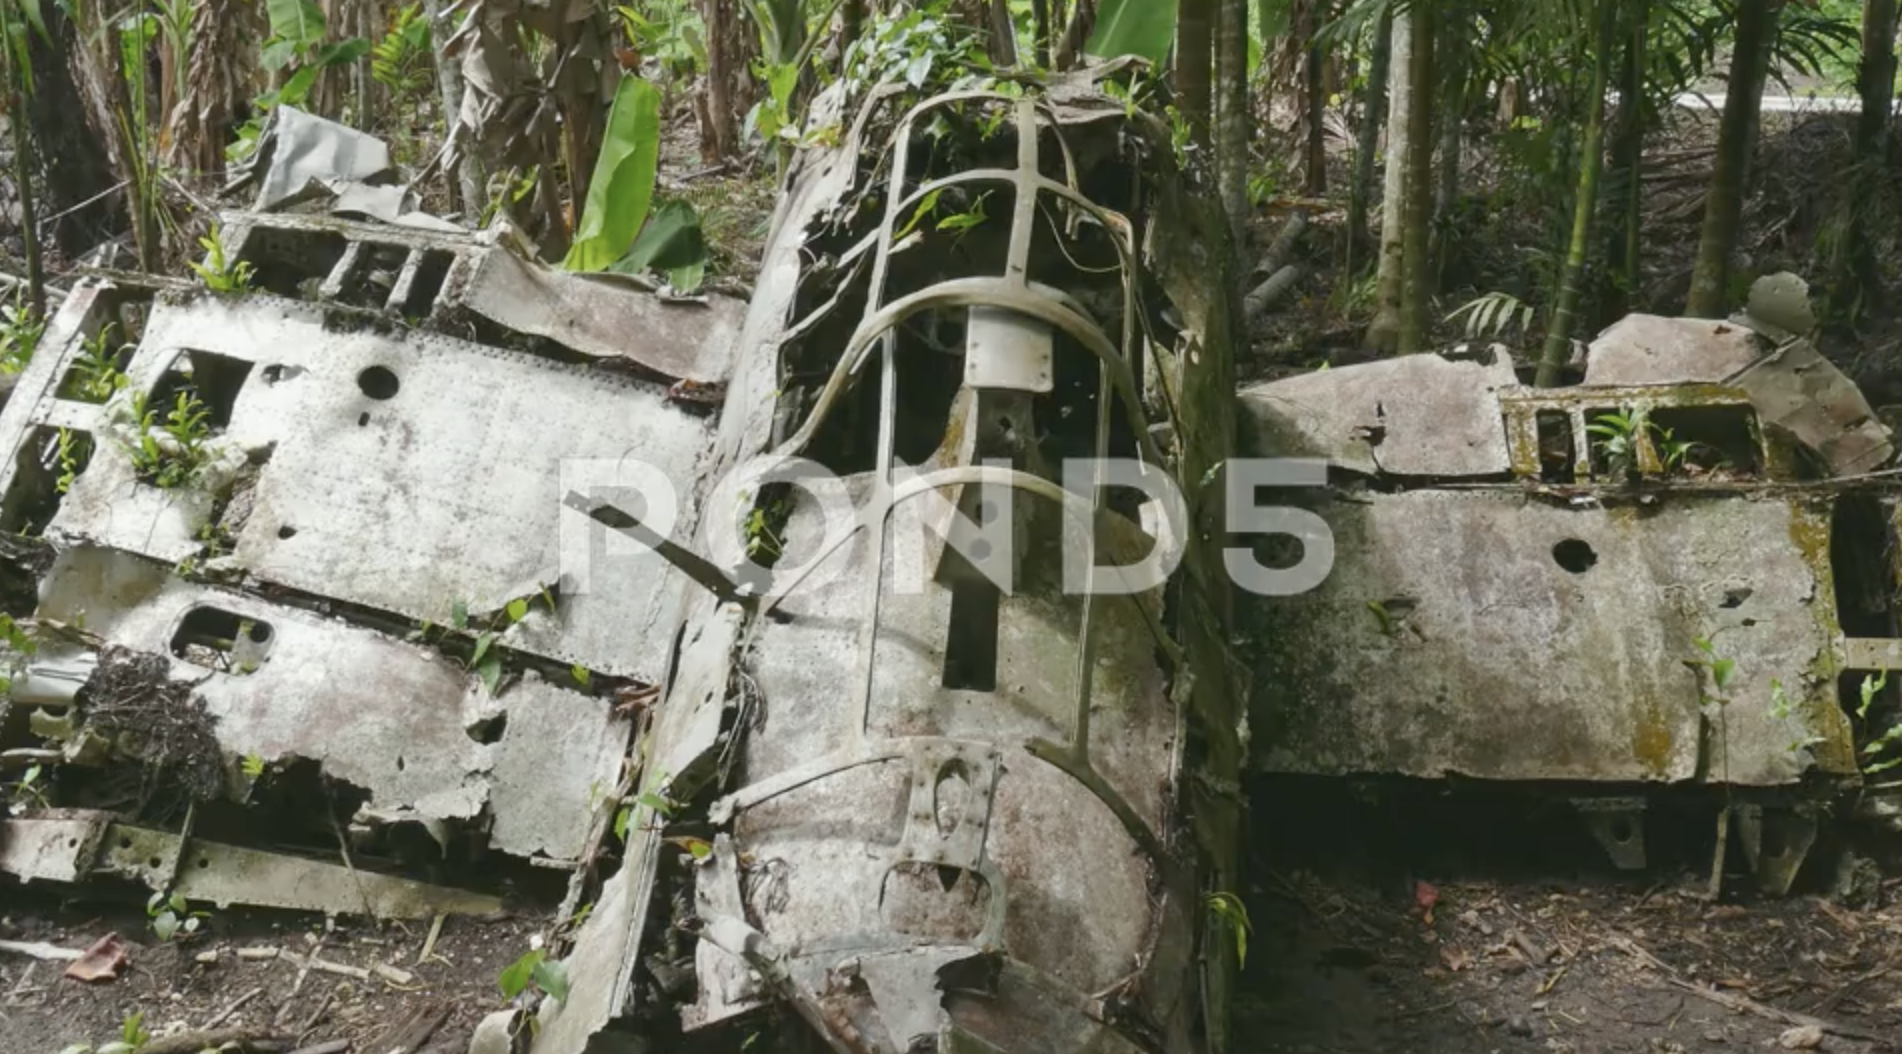 zero fighter ruins battle of peleliu palau screenshot stock video